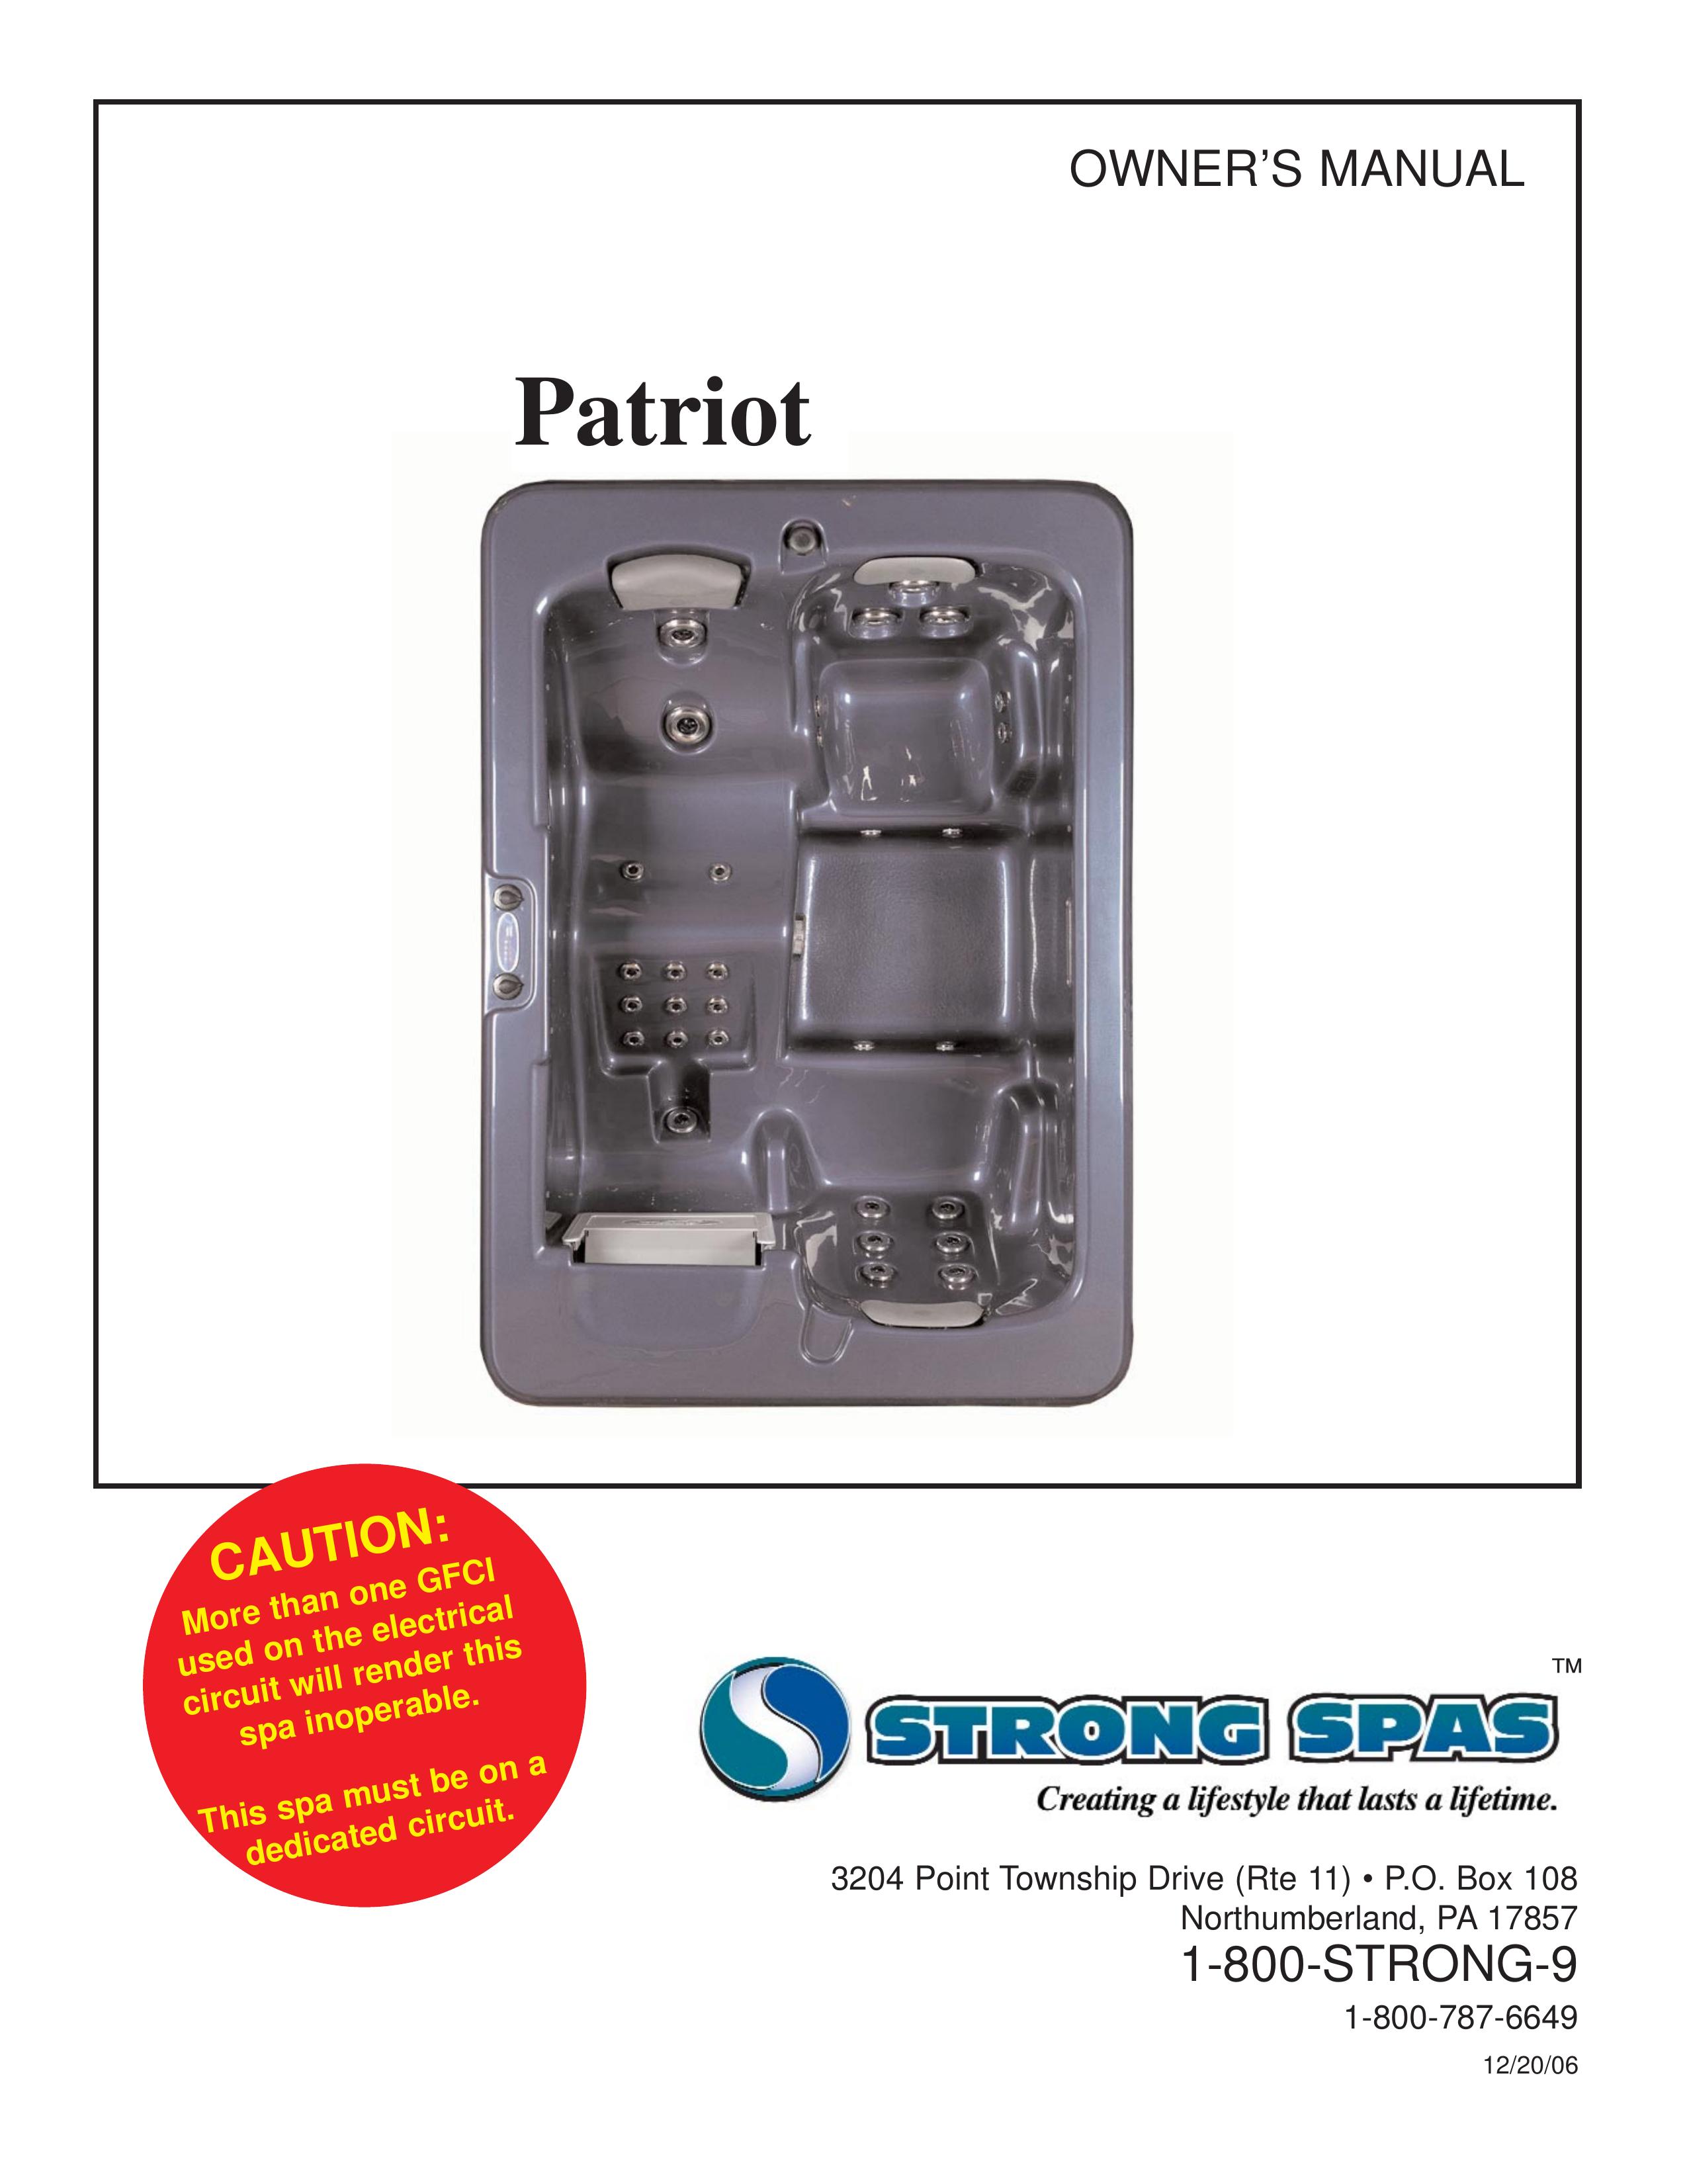 Strong Pools and Spas Patriot Spa Hot Tub User Manual